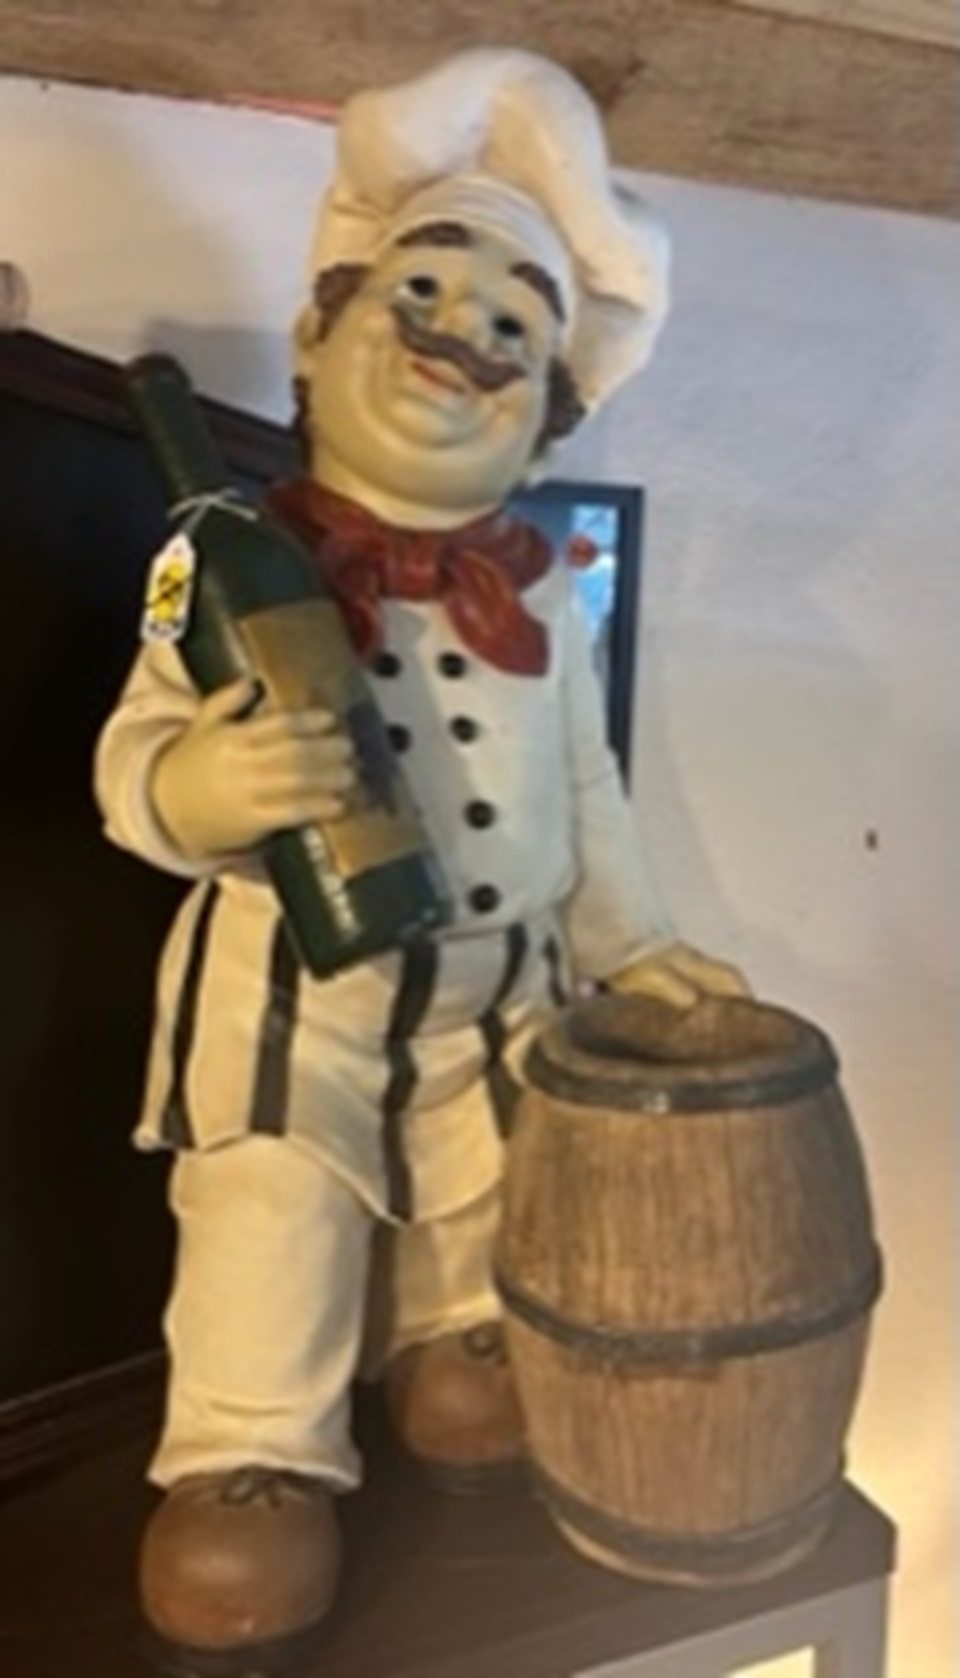 Chef statue holding wine bottle